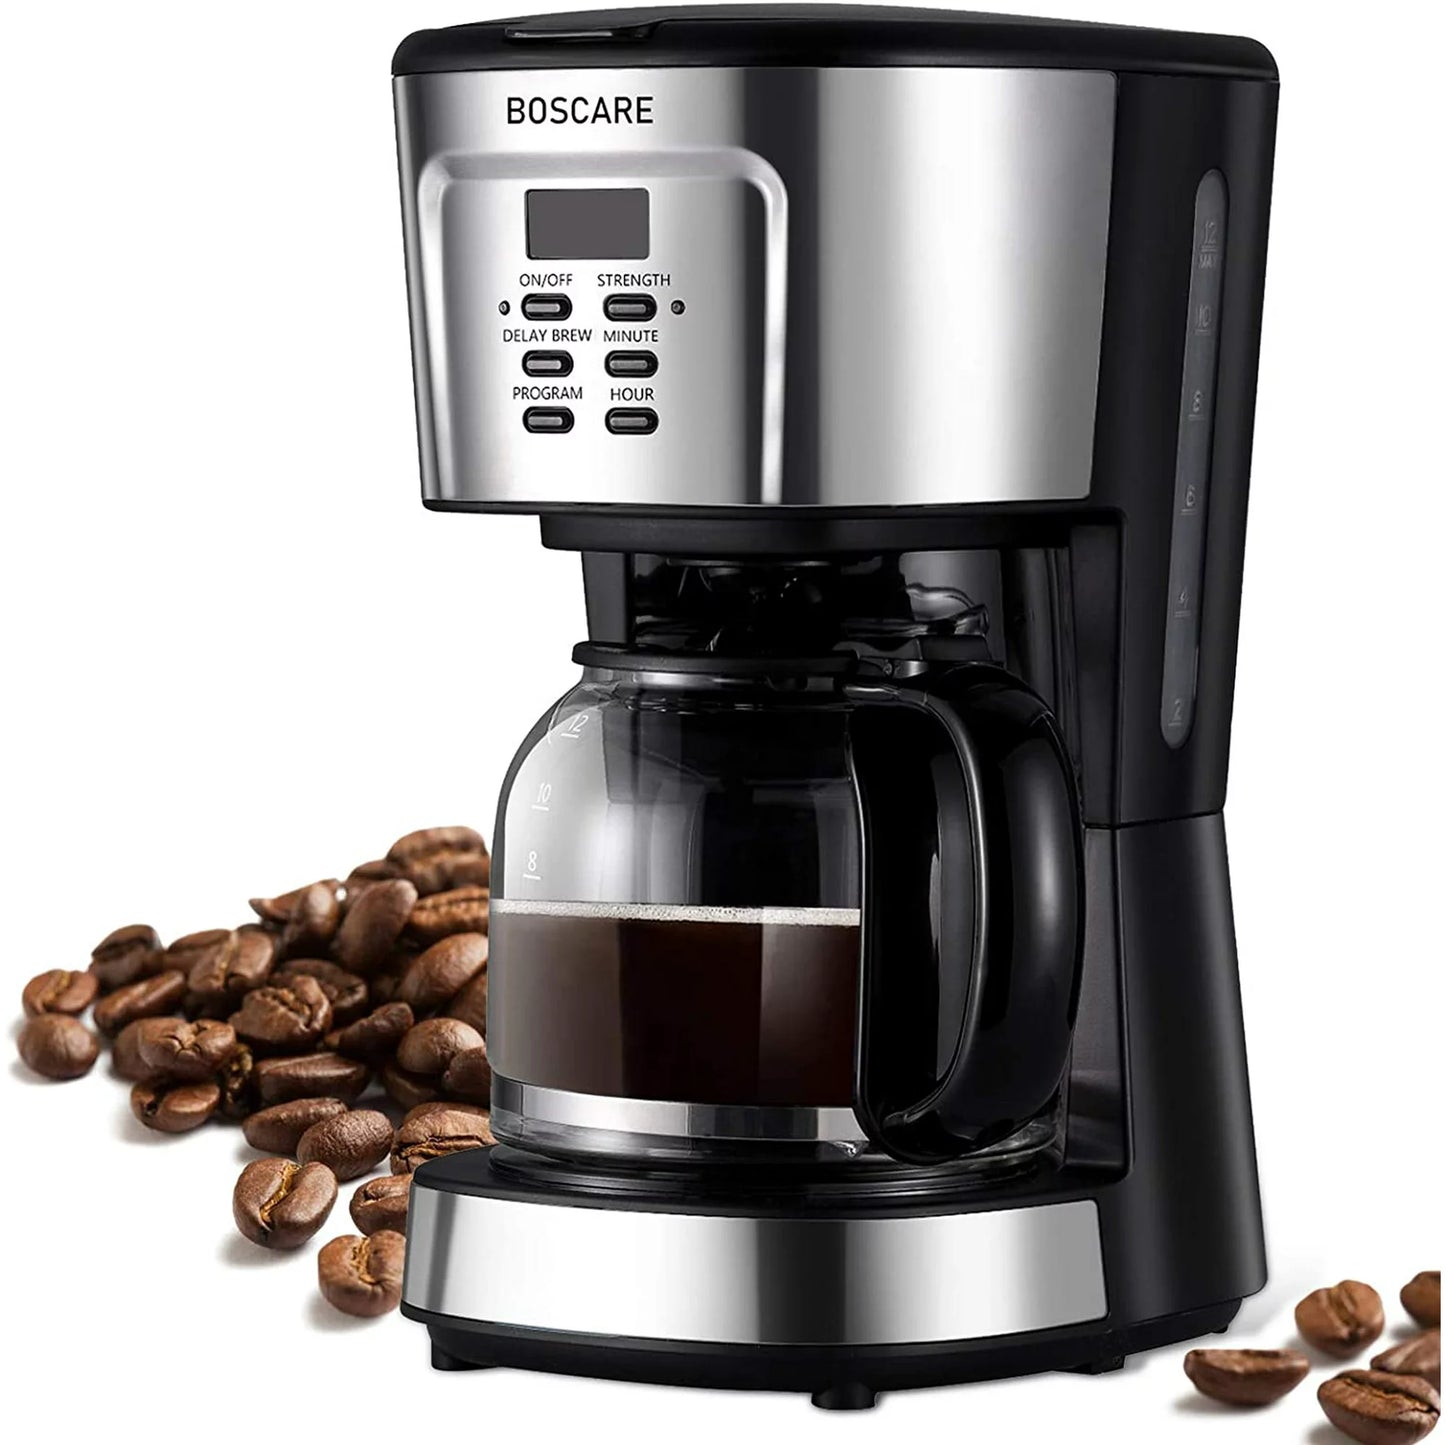 BOSCARE 12 Cup Programmable Coffee Maker, Drip Coffee Maker, Mini Coffee Machine with Auto Shut-off, Strength Control, Black & Silver - VANELC